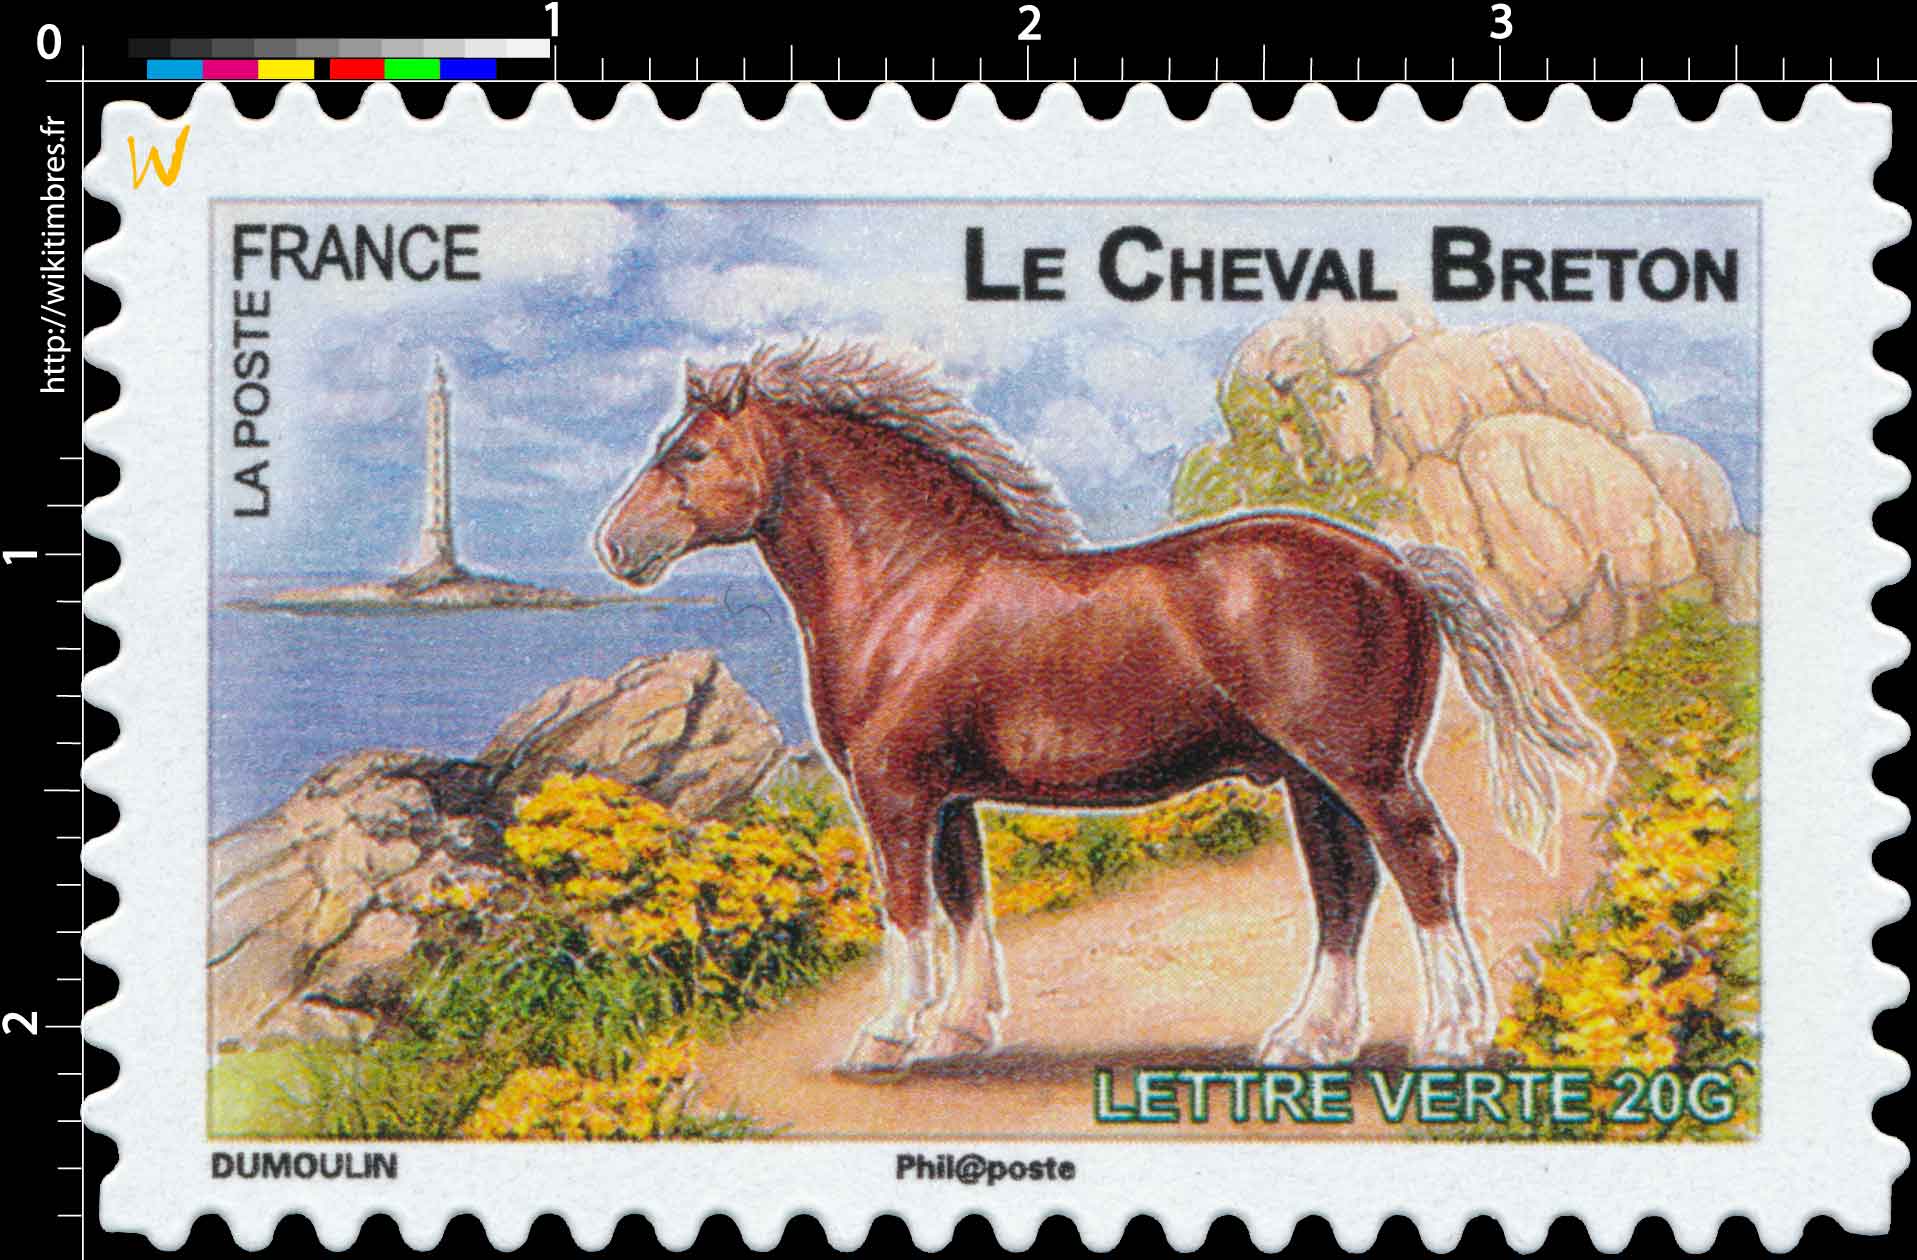 Le Cheval Breton